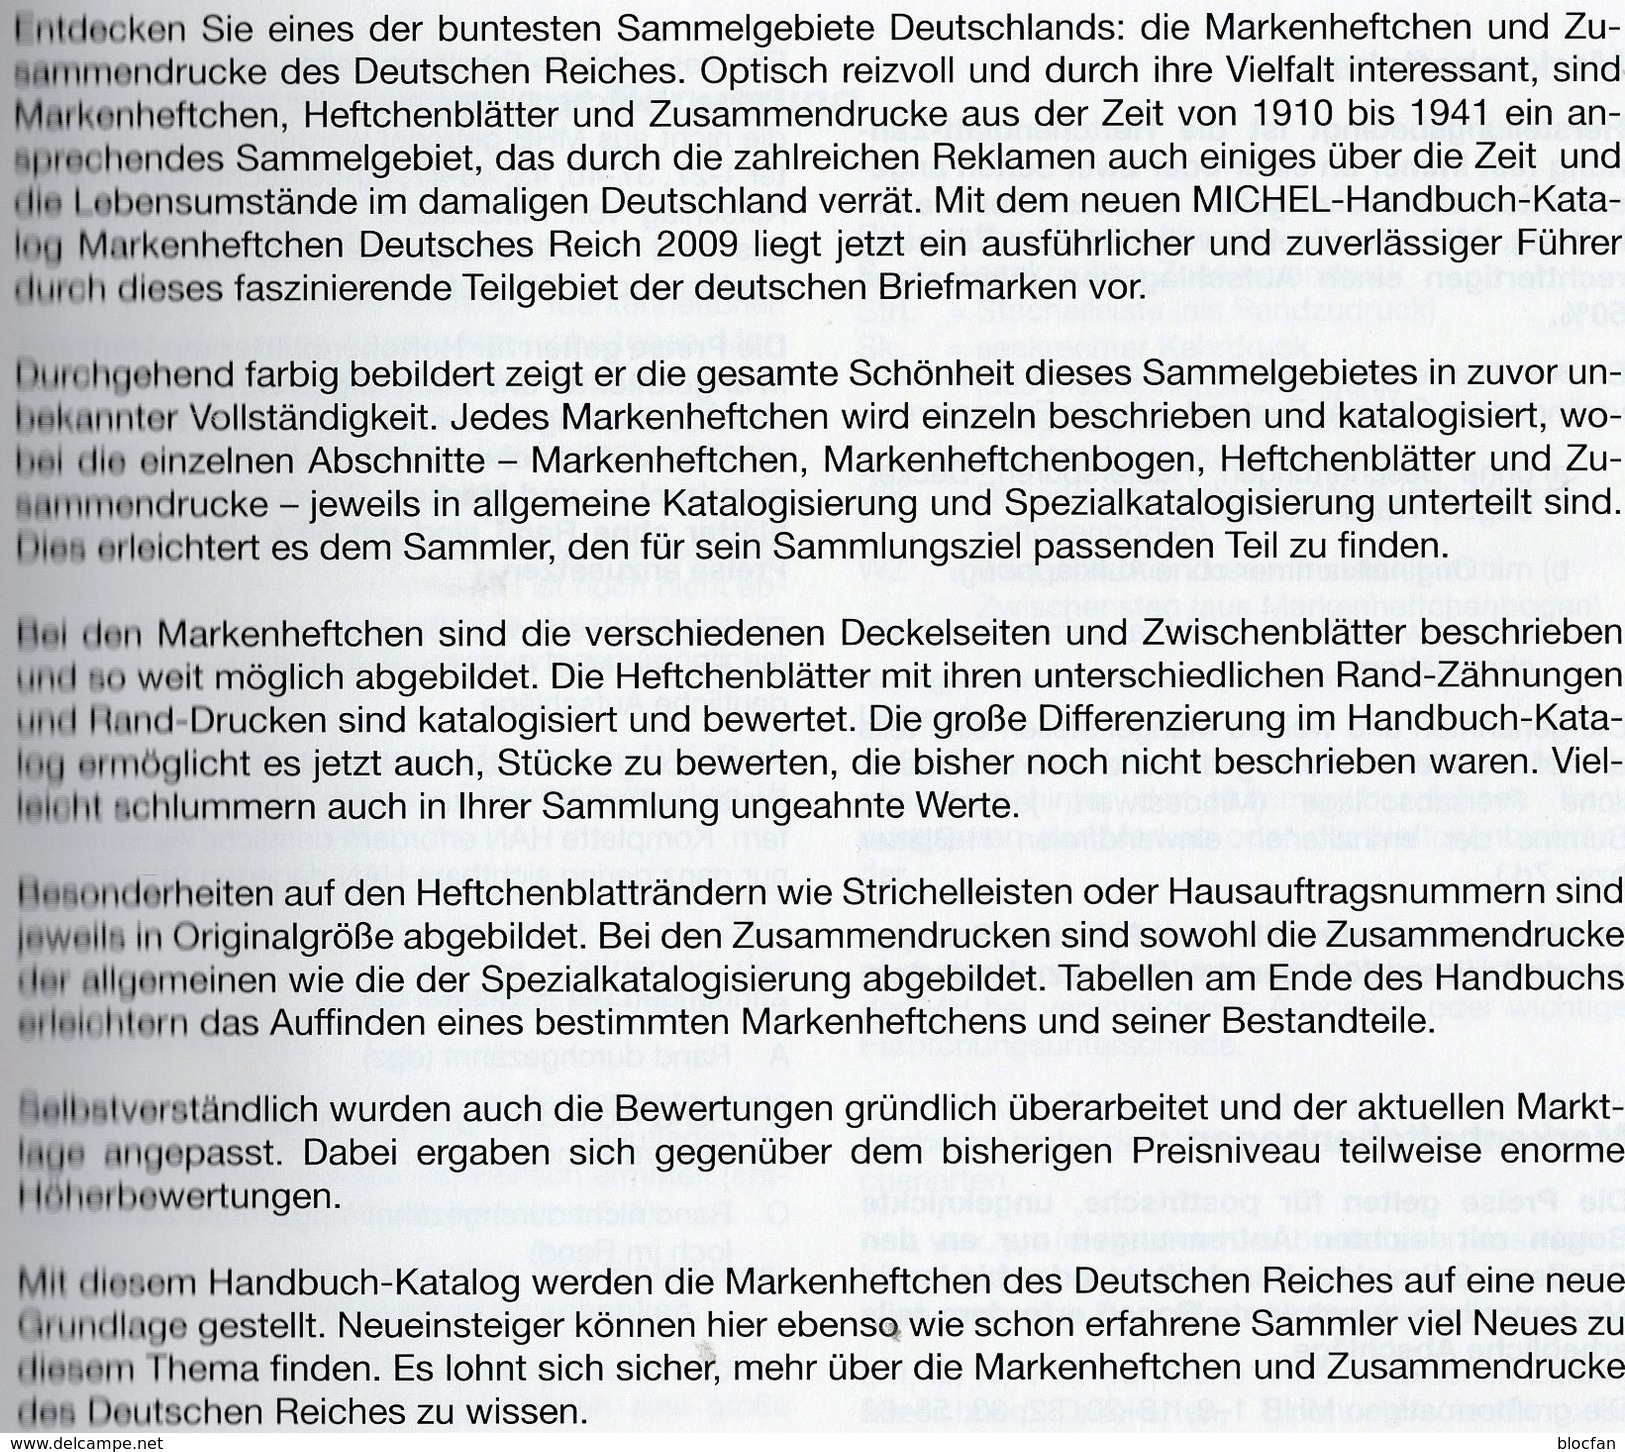 Markenheft MlCHEL Handbuch Deutsche Reich 2009 Neu 98€ Handbook With Special Carnets Booklets Catalogue Old Germany - Original Editions